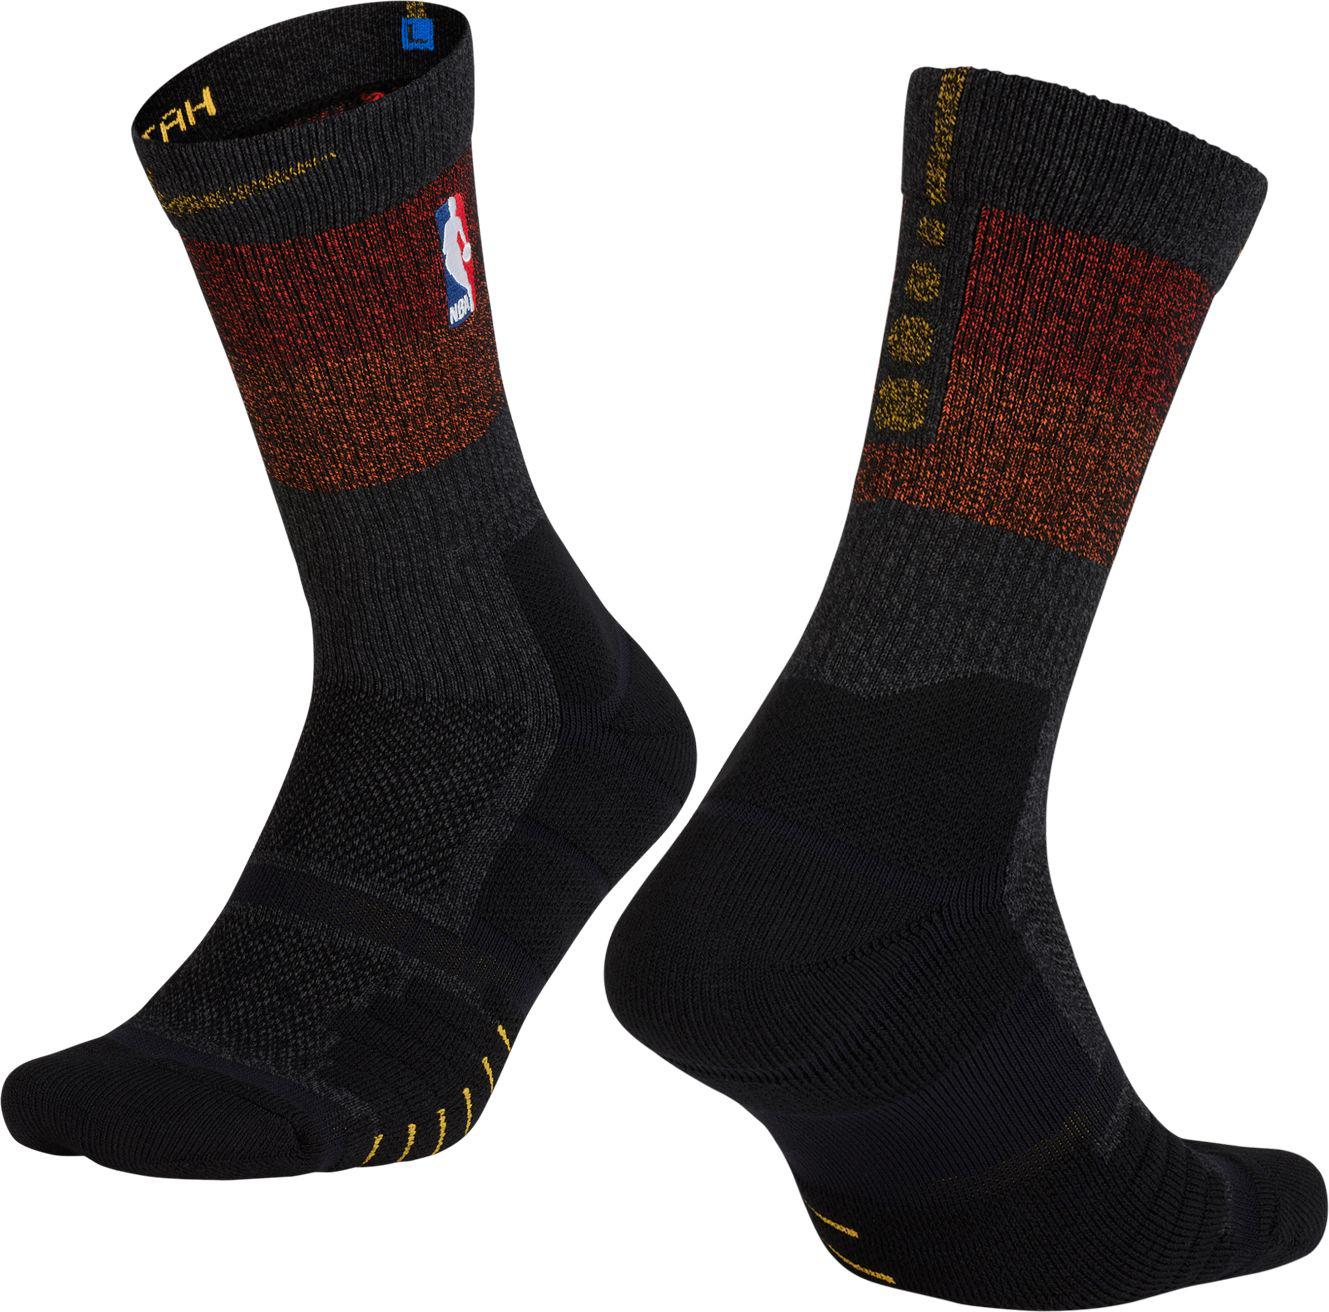 Utah Jazz City Edition Socks on Sale, 57% OFF | www.enaco.com.pe